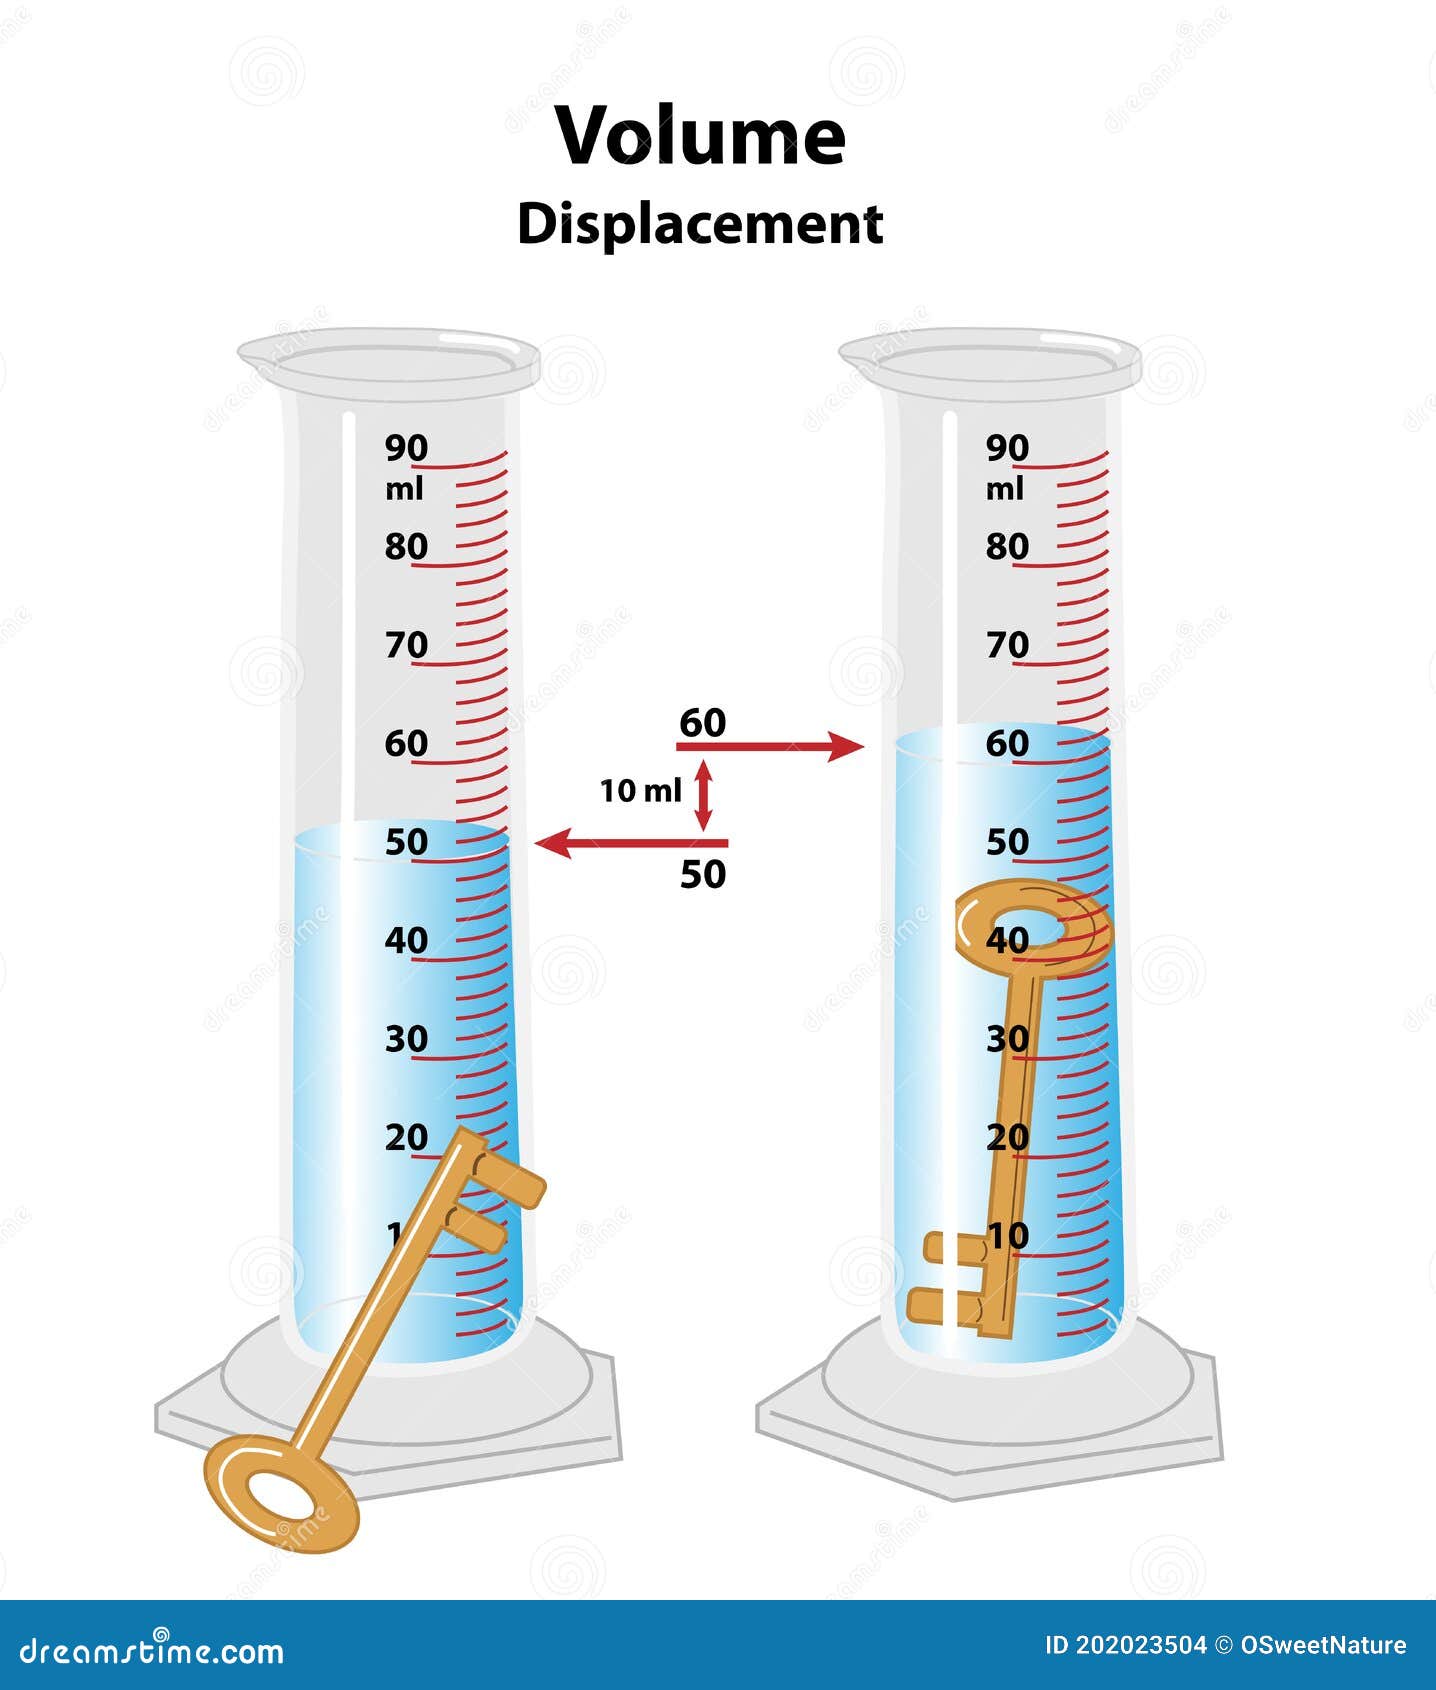 displacement method to measure volume